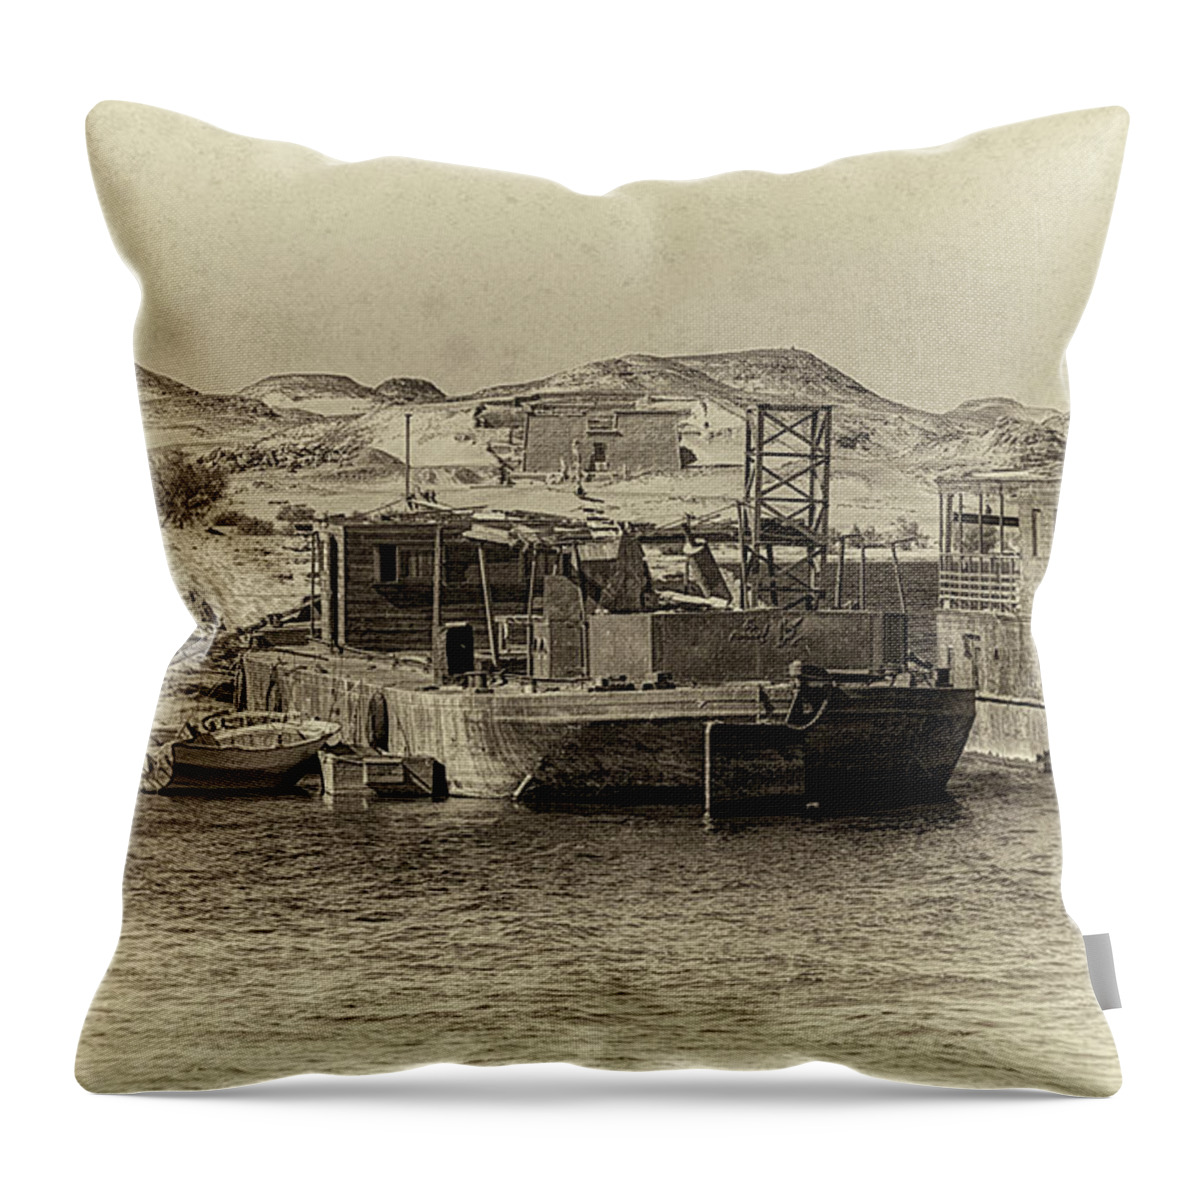 Sebua Throw Pillow featuring the photograph Wadi al-Sebua Antiqued by Nigel Fletcher-Jones